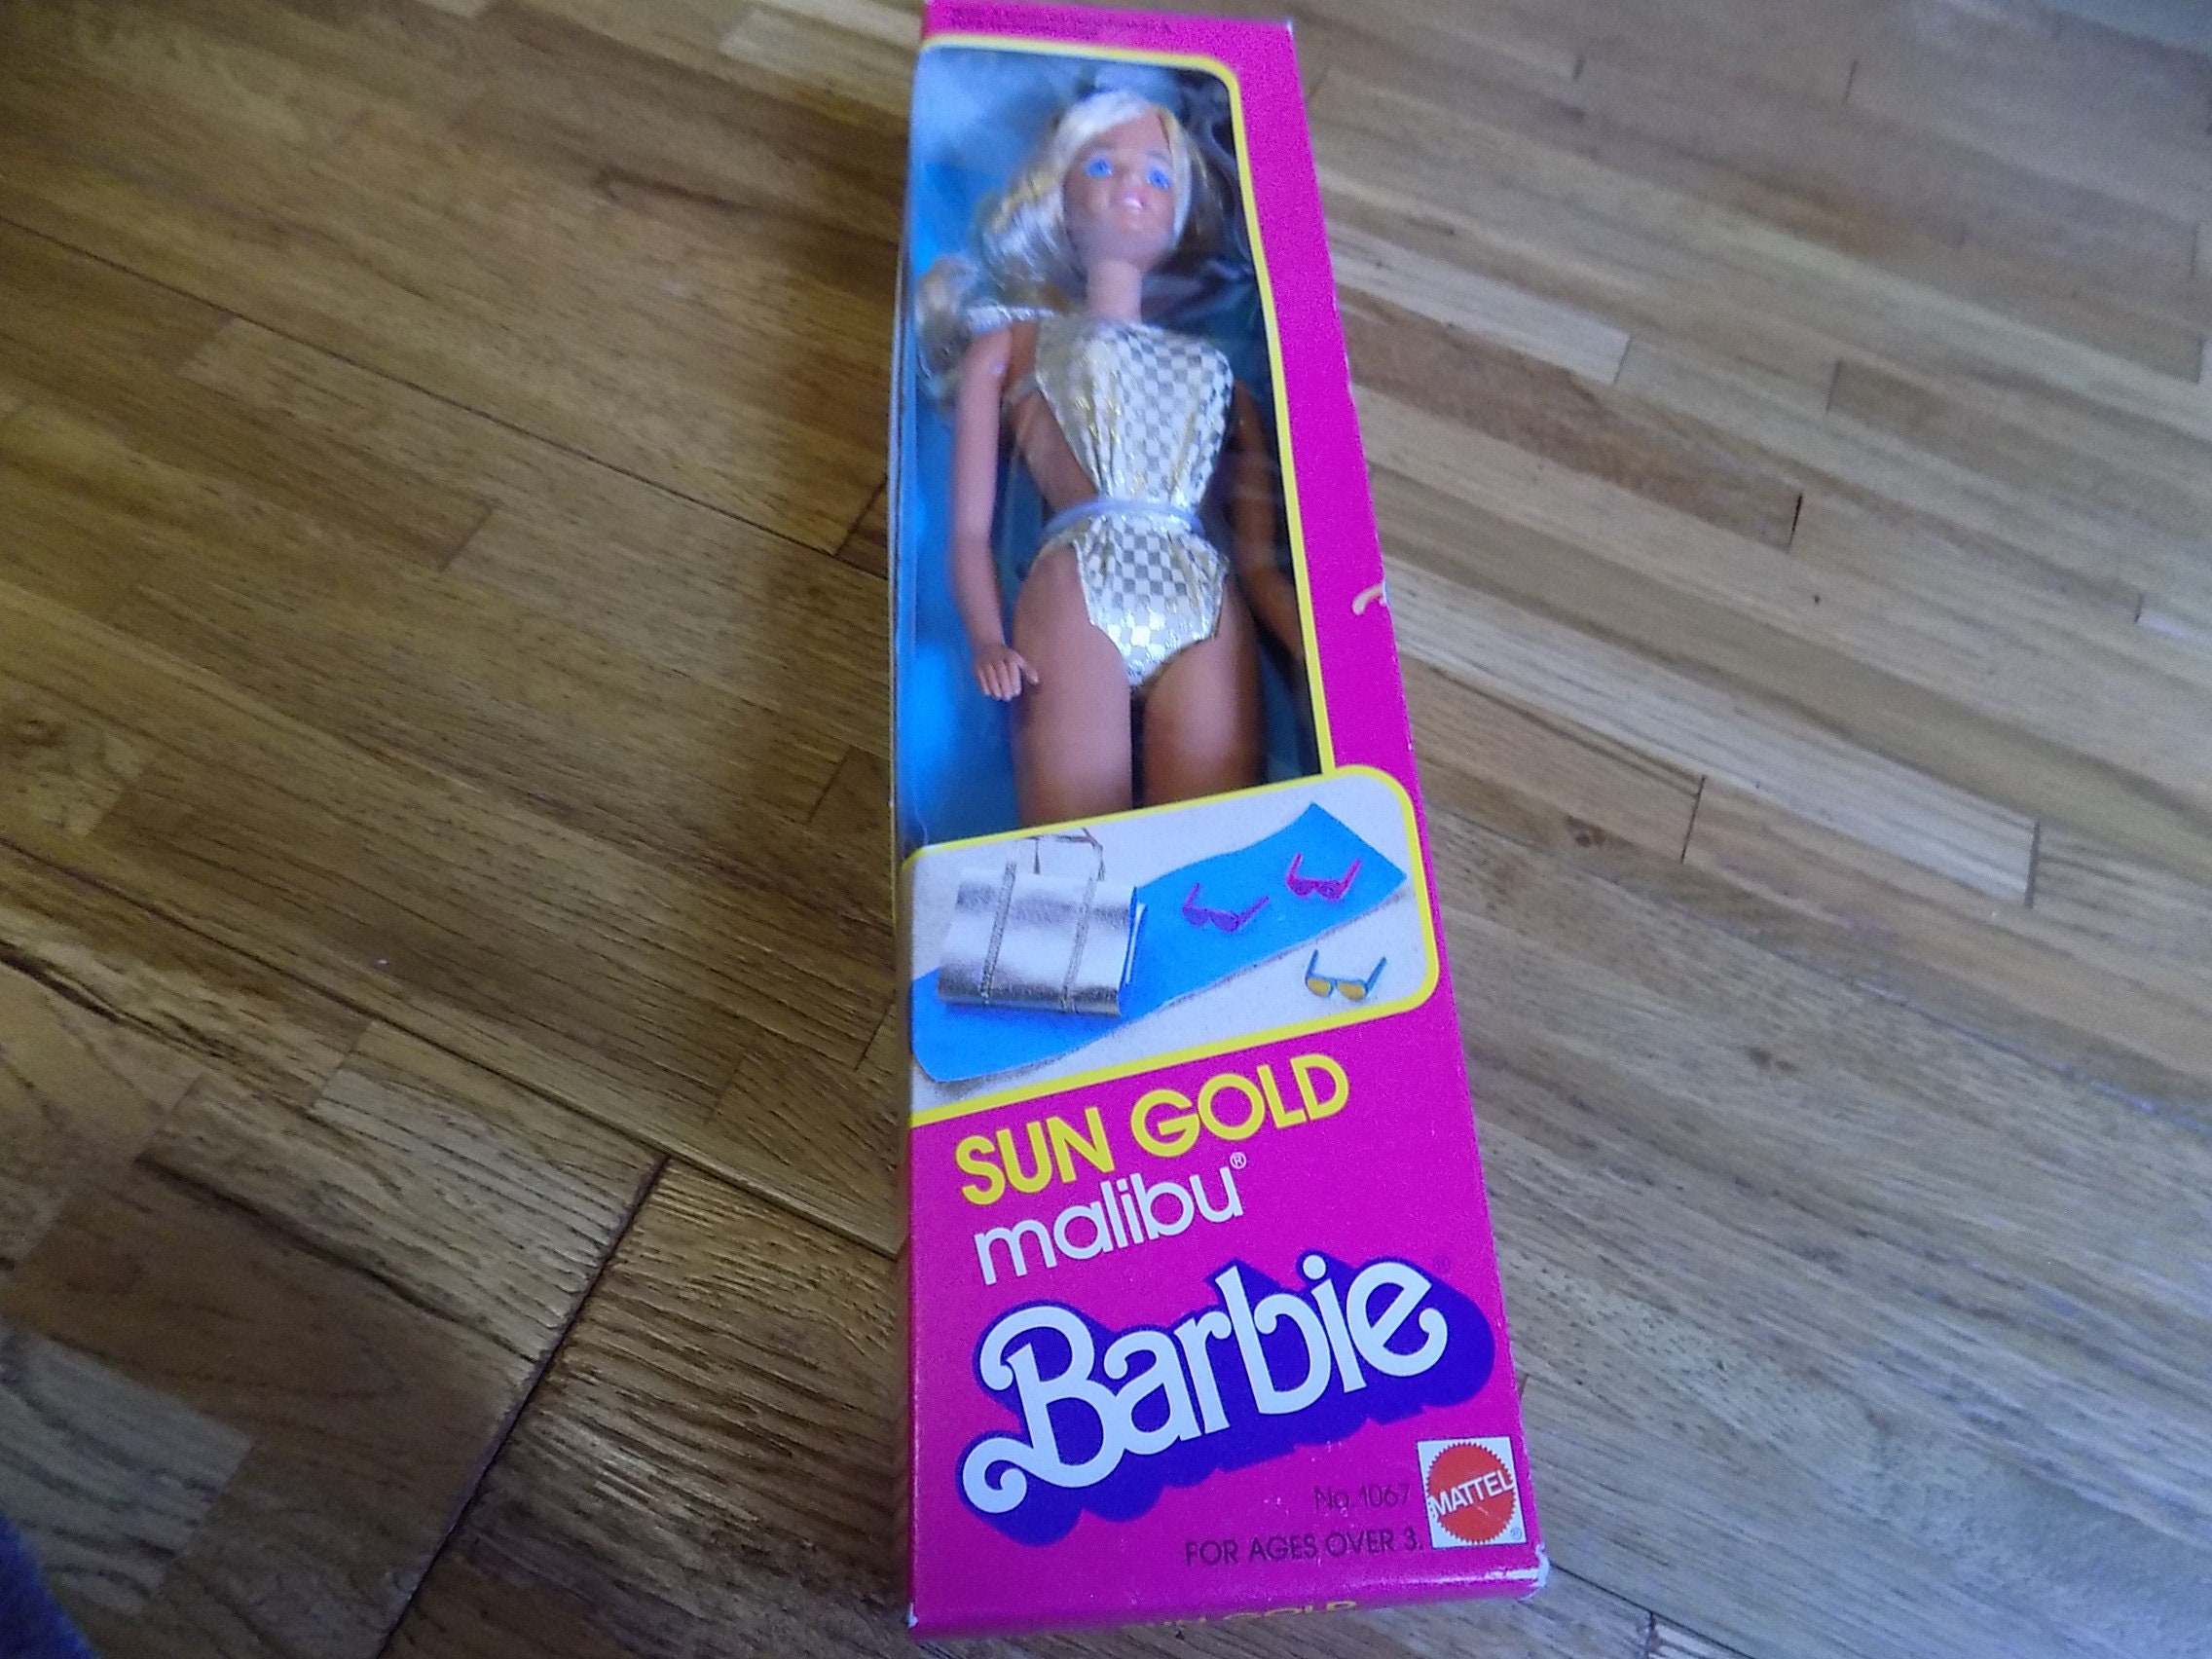 Vintage Sun Gold Malibu Barbie by Mattel 1983 1067 